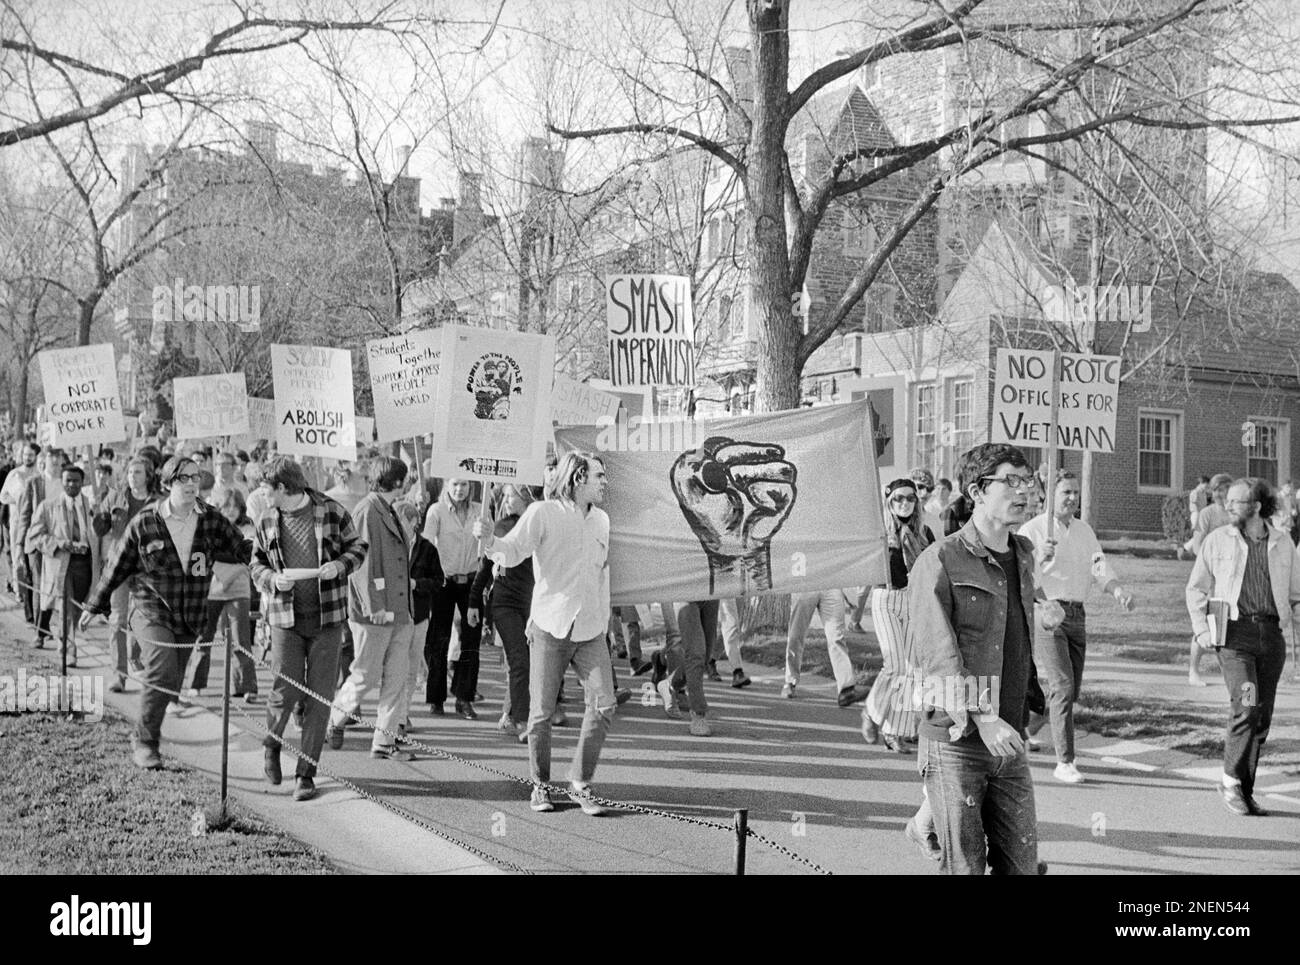 R.O.T.C. and Anti-War Demonstrators, Princeton University, Princeton, New Jersey, USA, John T. Bledsoe, U.S. News & World Report Magazine Photograph Collection, April 25, 1969 Stock Photo